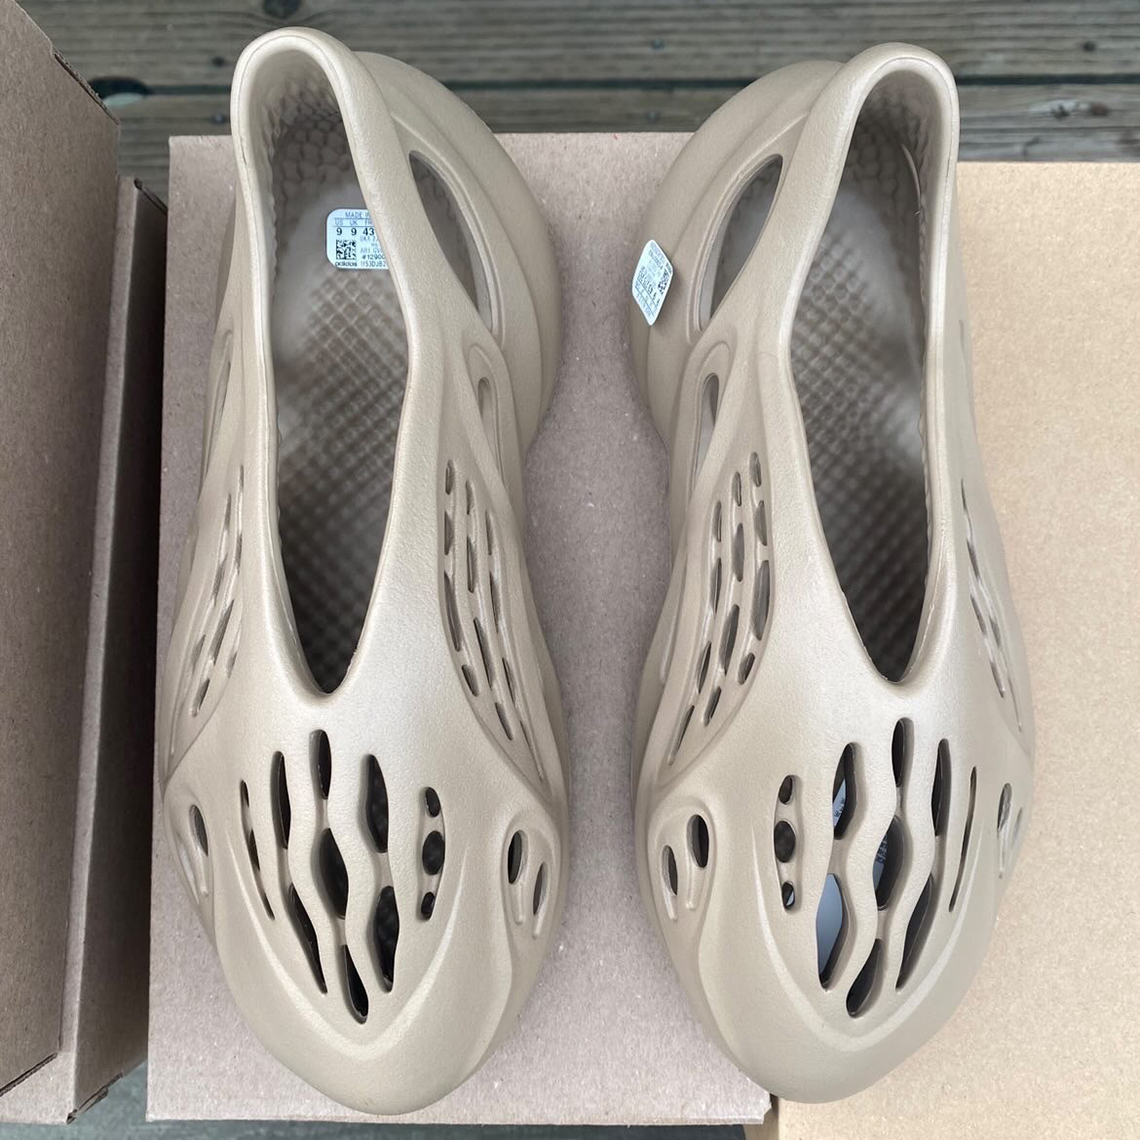 Adidas Yeezy Foam Runner Mist Gv6774 Release Date 3